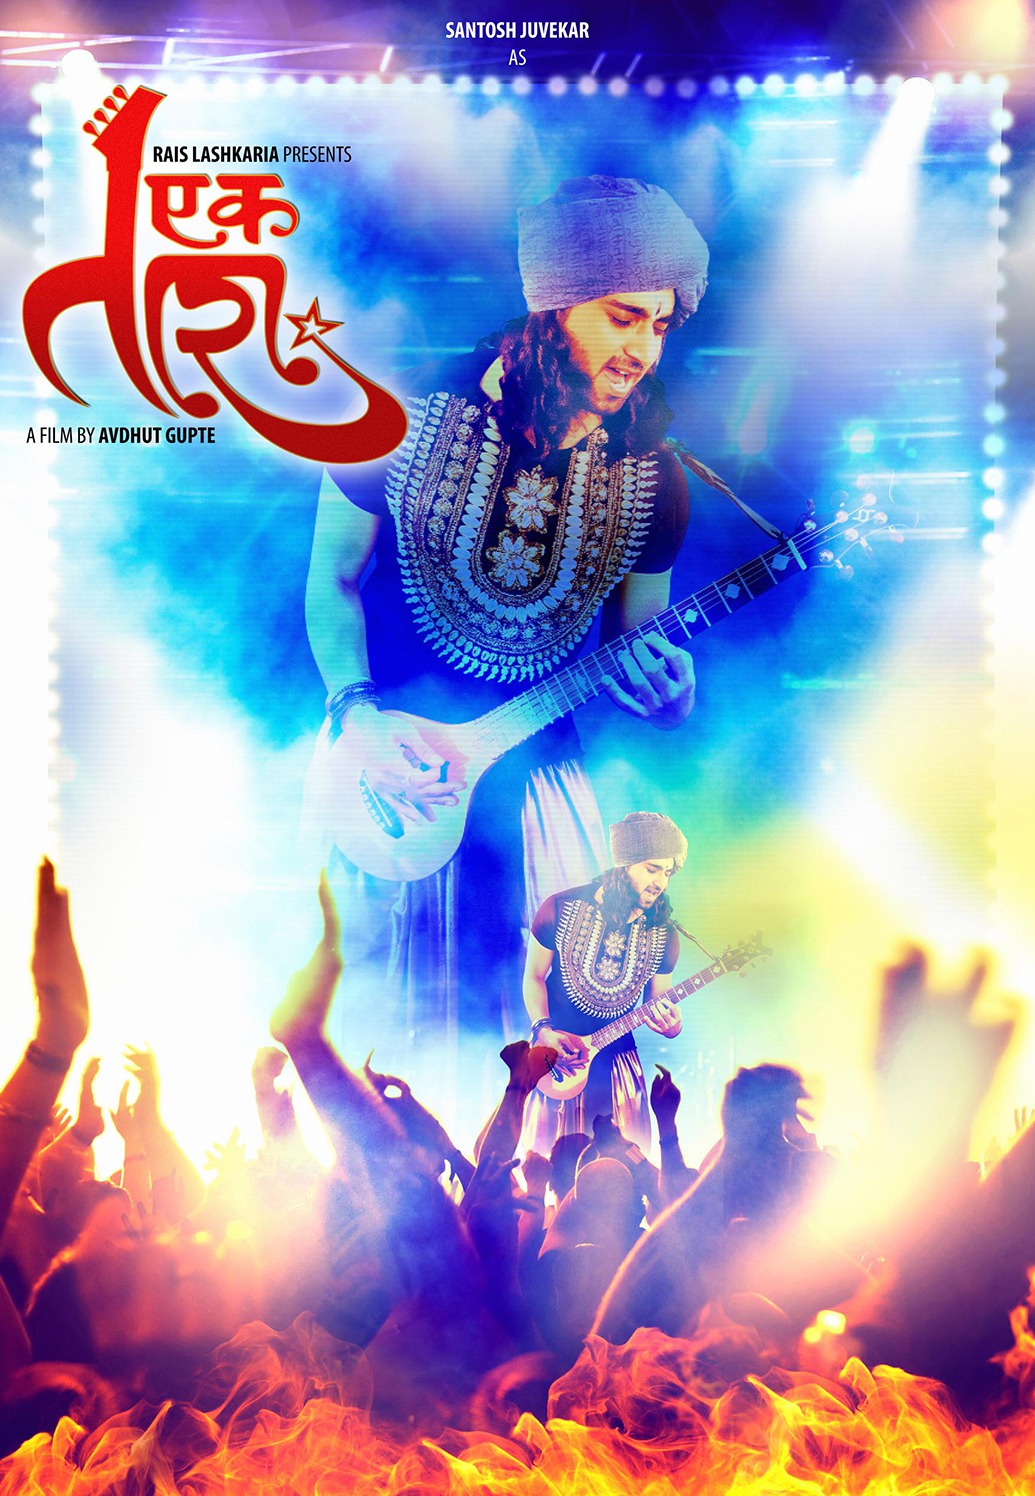 Extra Large Movie Poster Image for Ek Tara (#1 of 3)